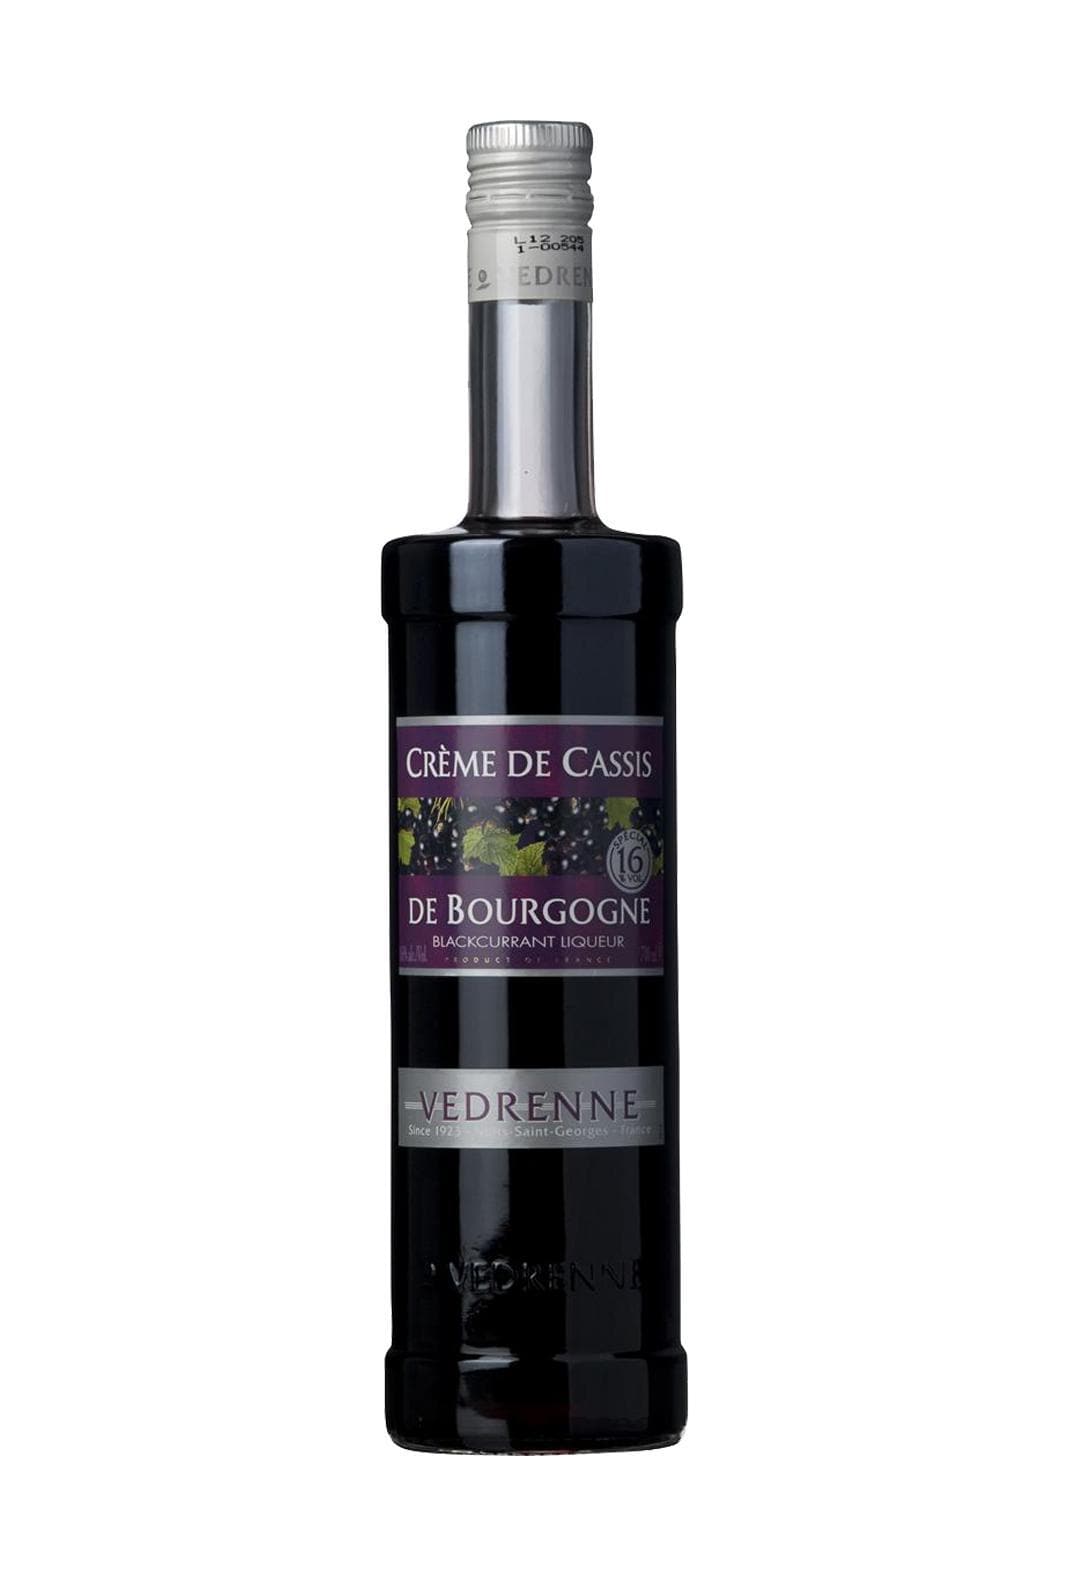 Vedrenne Liqueur Creme de Cassis (Blackcurrant) 16% 700ml | Liqueurs | Shop online at Spirits of France